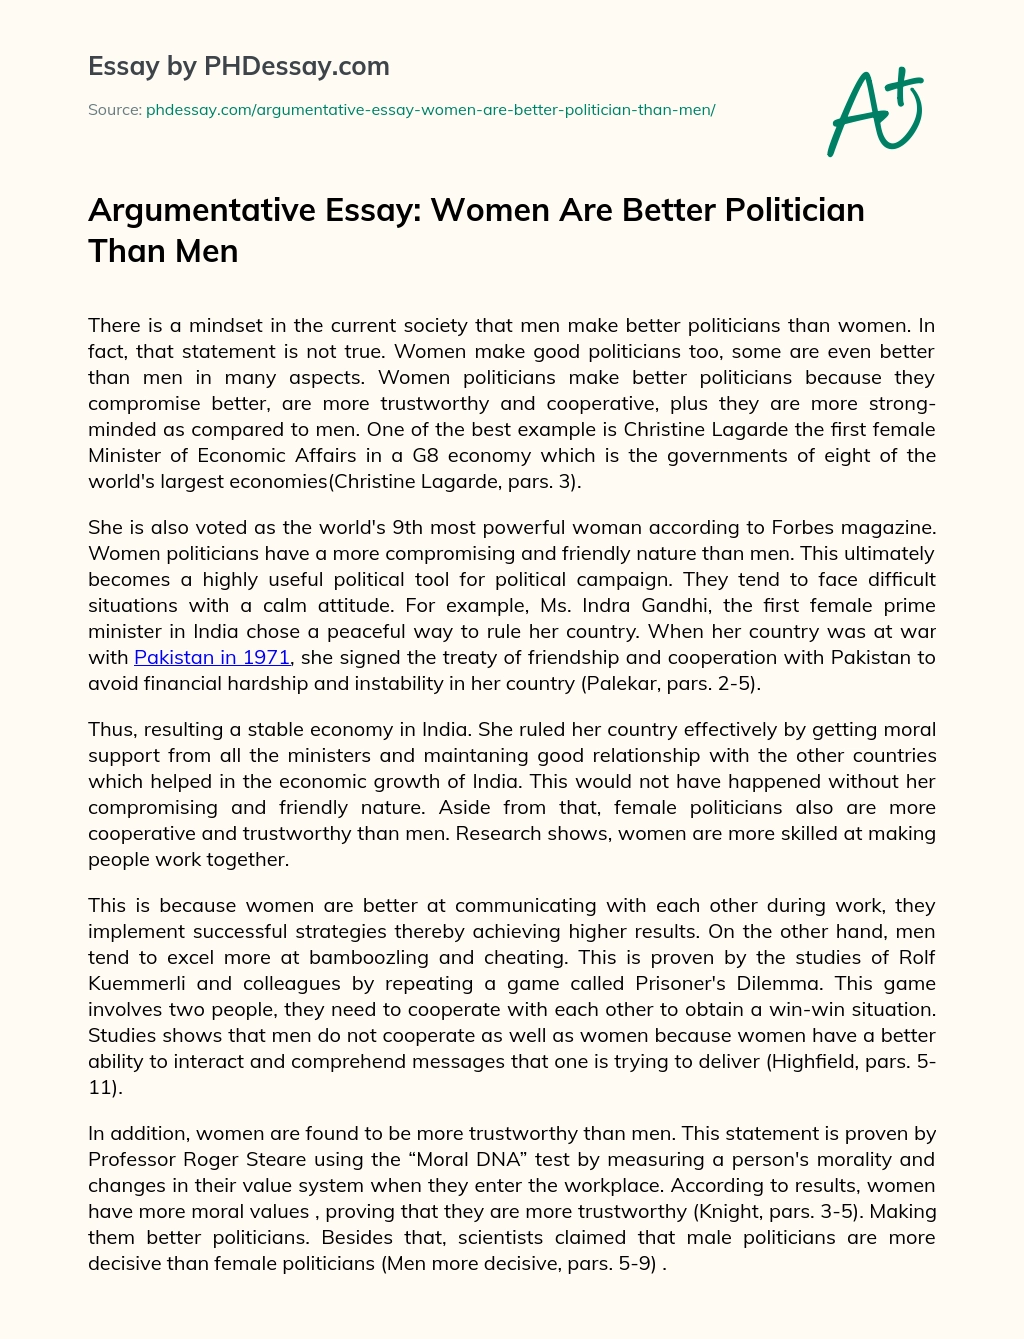 Argumentative Essay: Women Are Better Politician Than Men essay